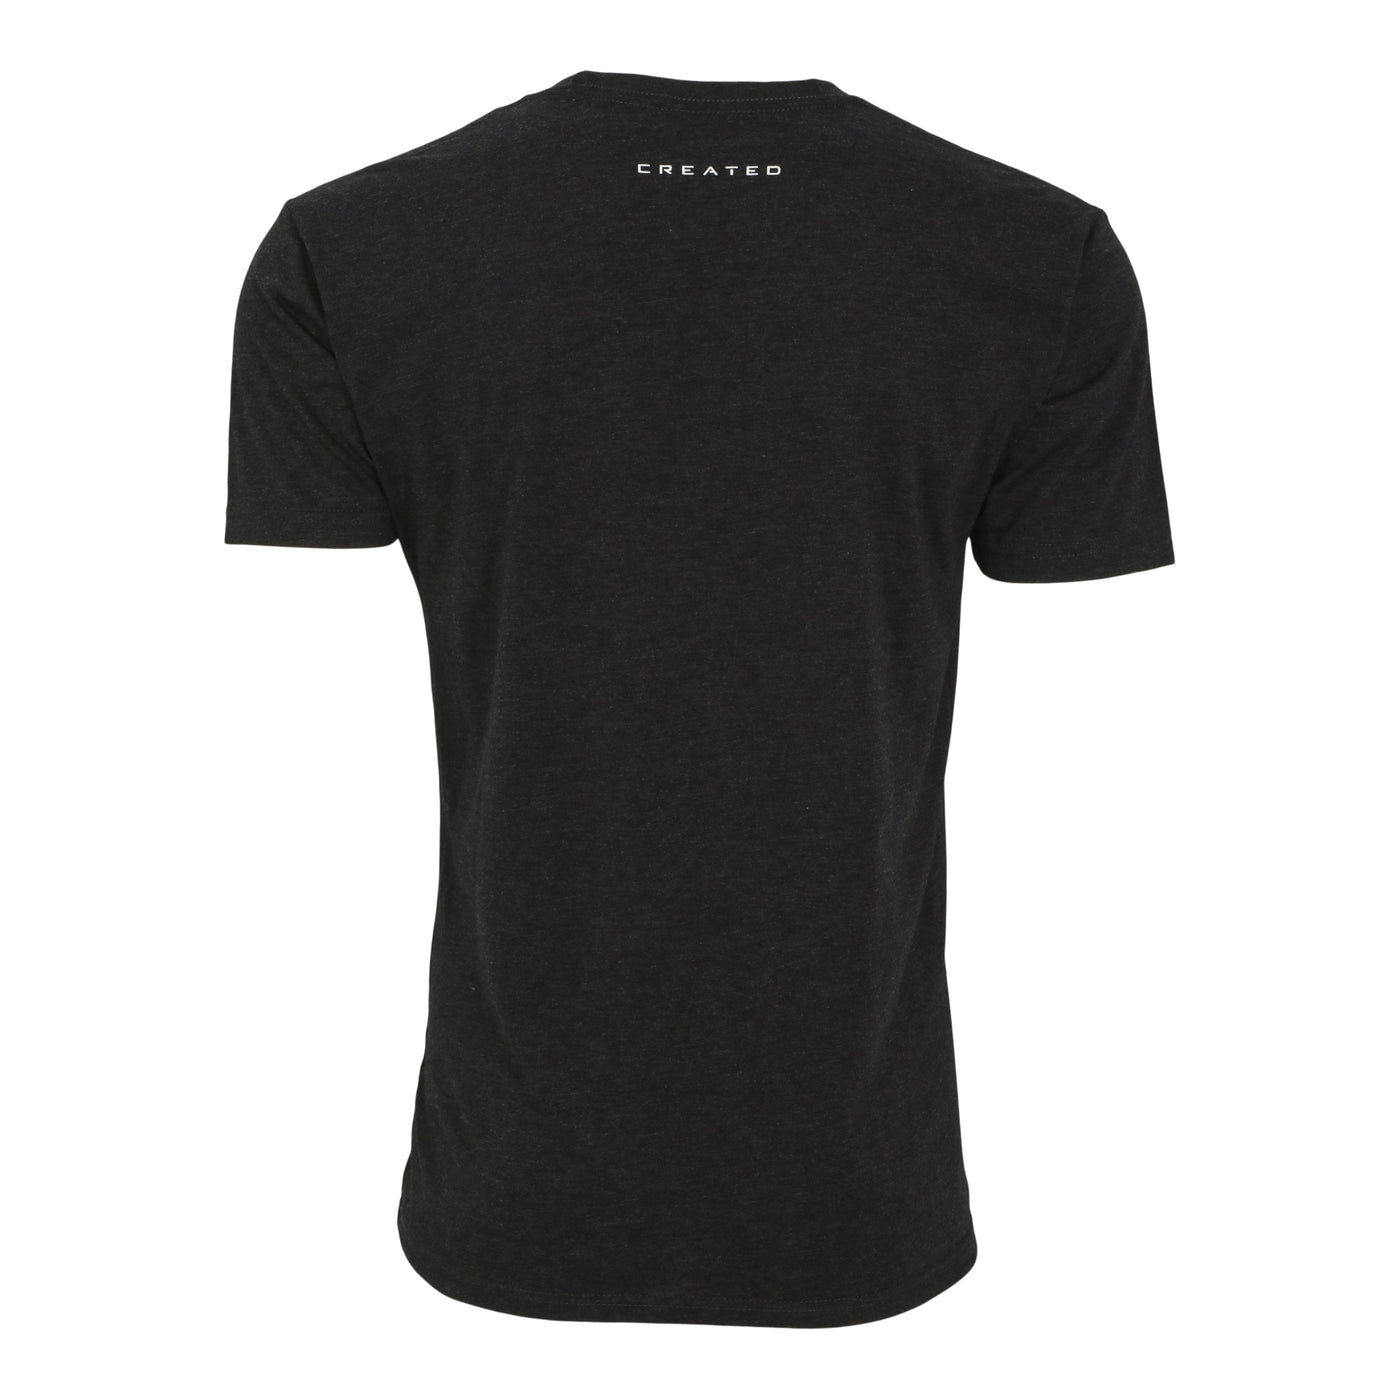 Created Infinity Ichthys Tri-Blend black T-shirt rear view